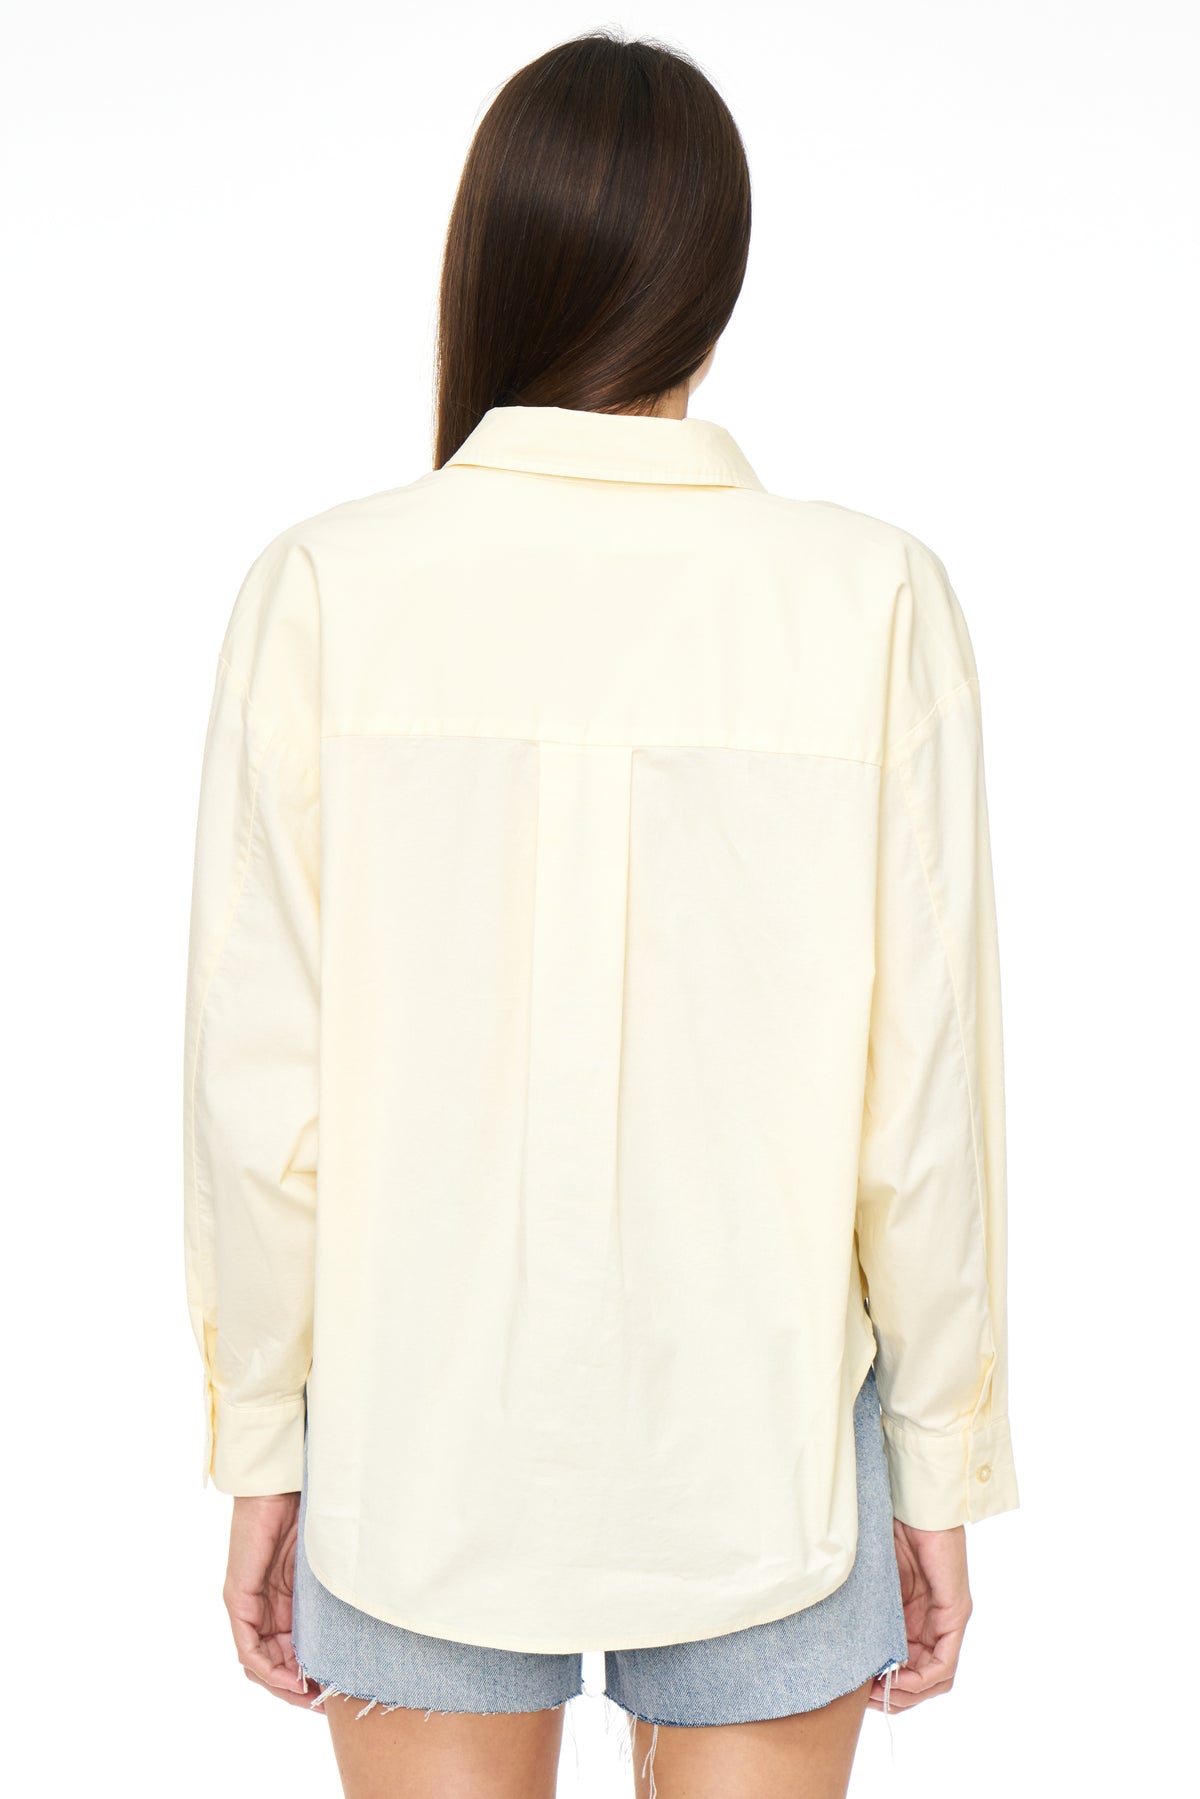 Sloane Long Sleeve Oversized Button Down Shirt - Butter Yellow